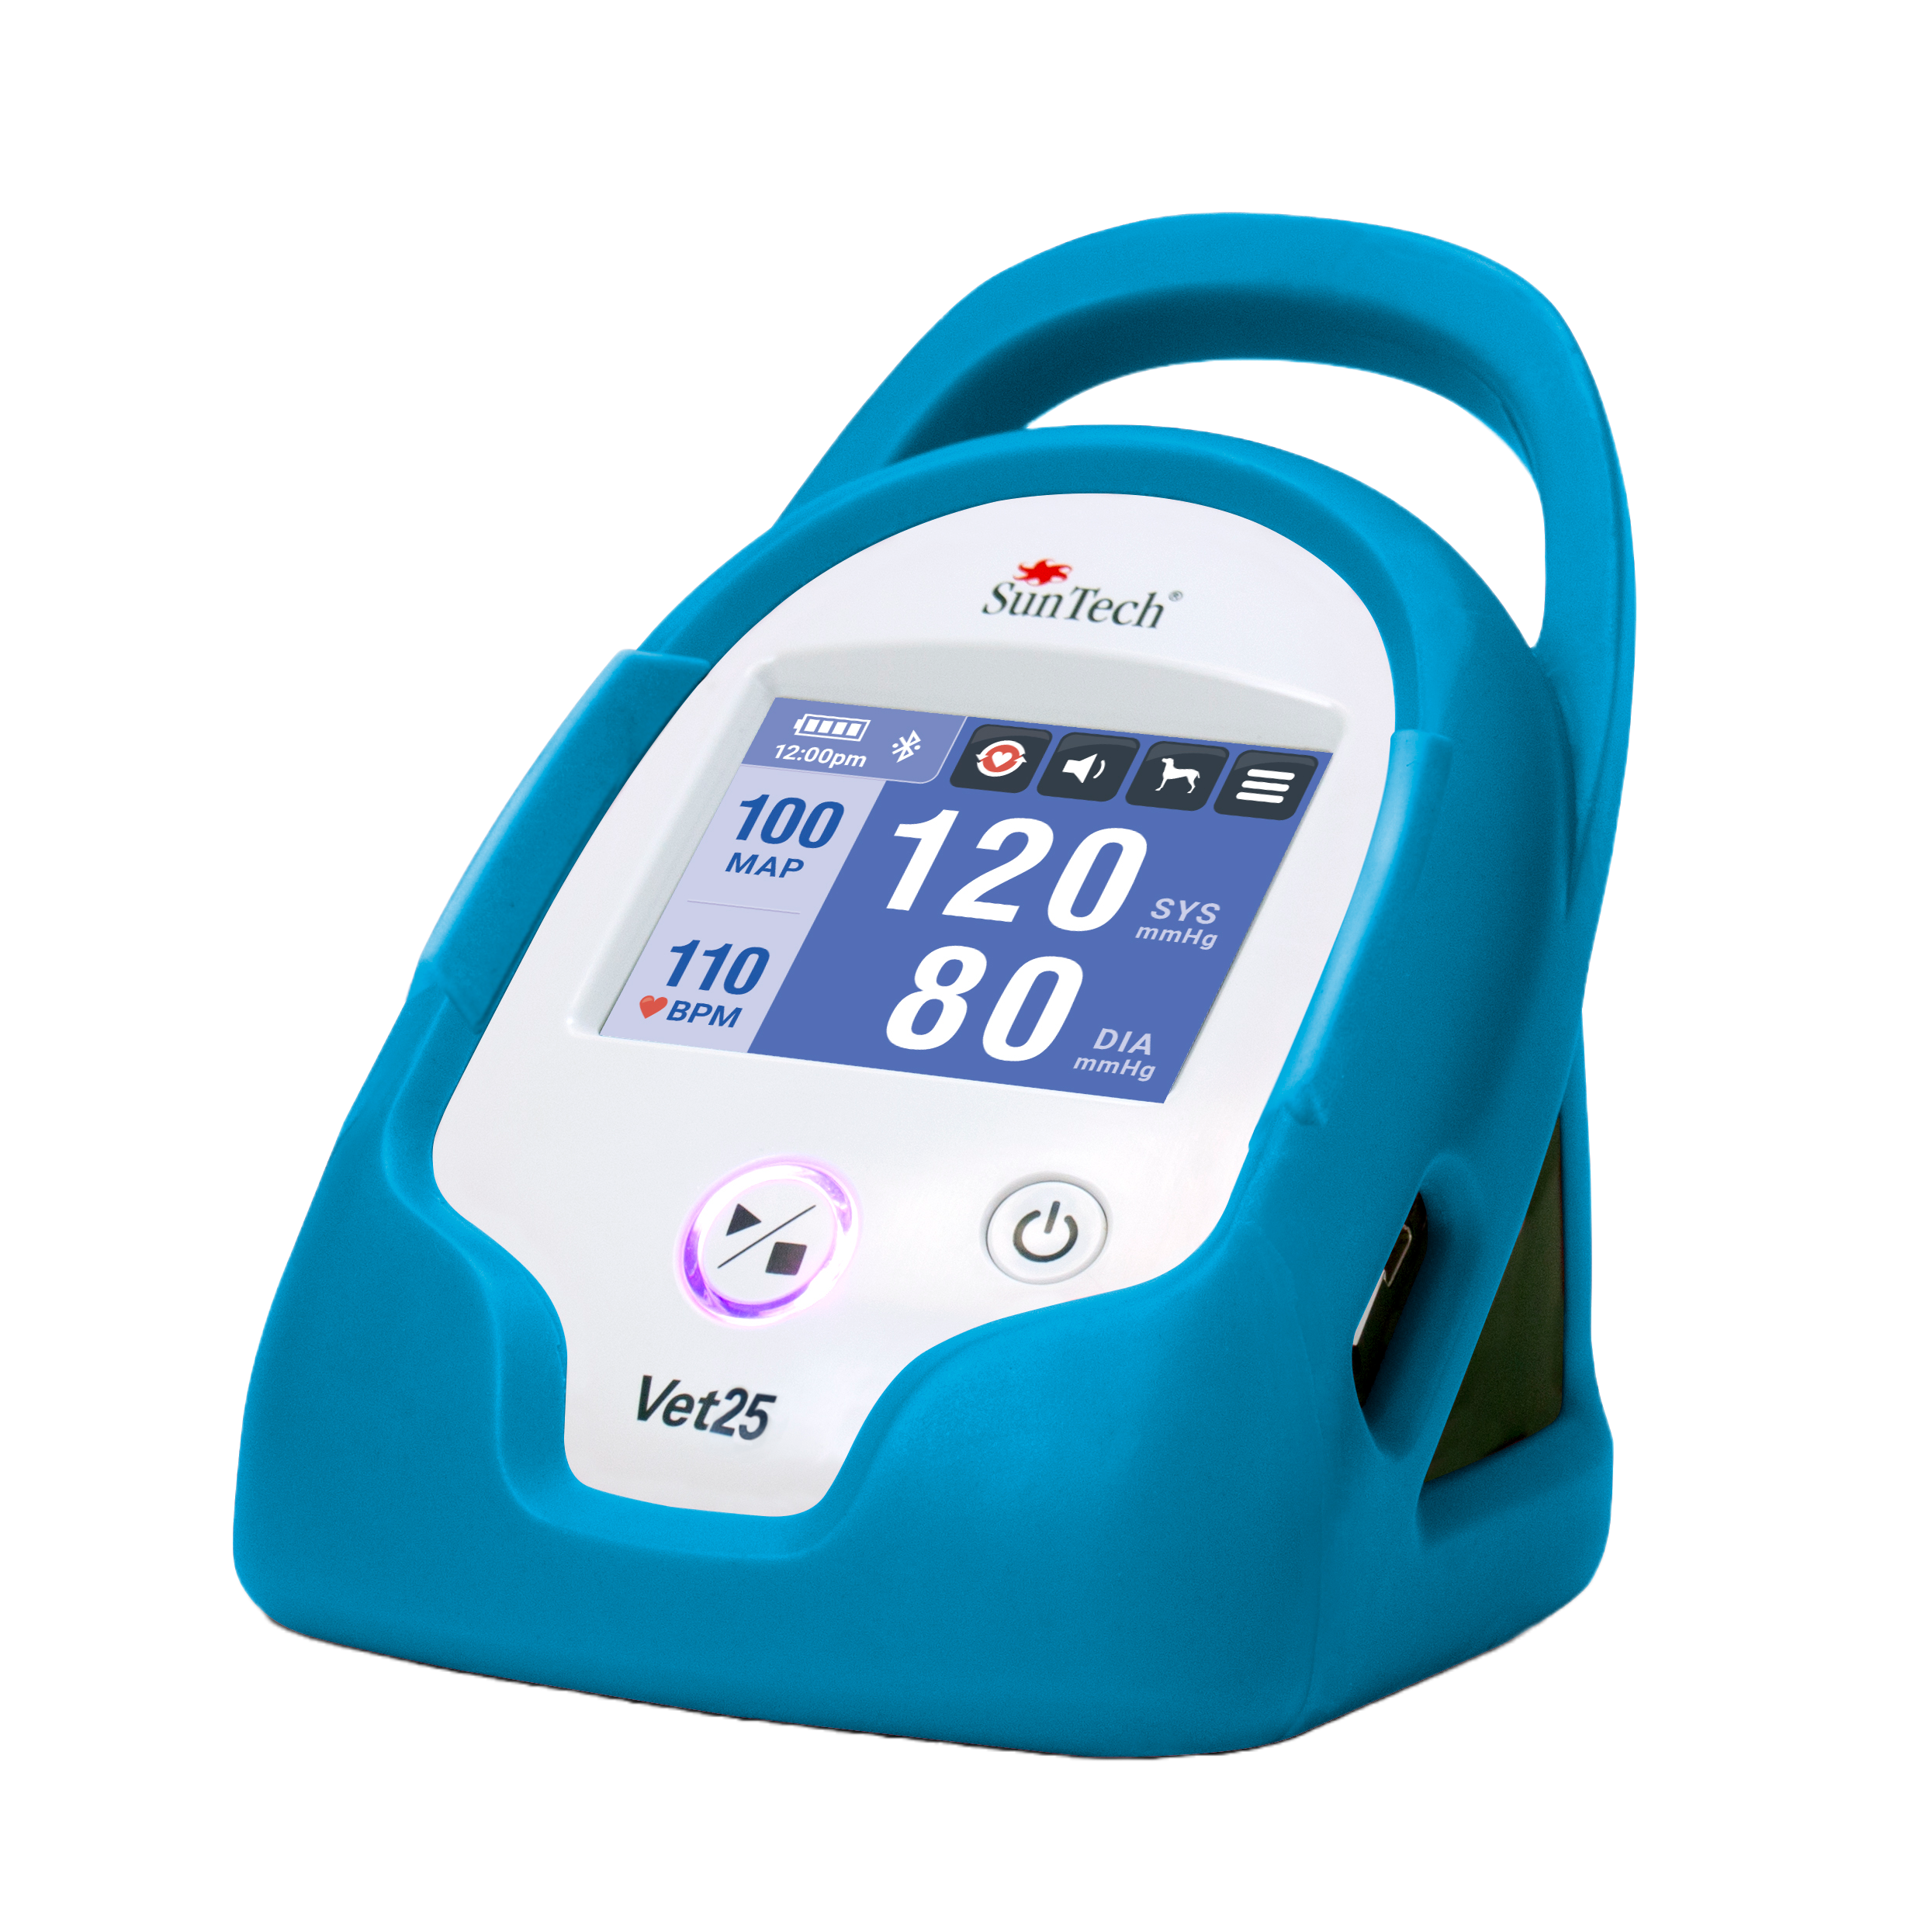 Suntech V25 Pet Blood Pressure Monitor